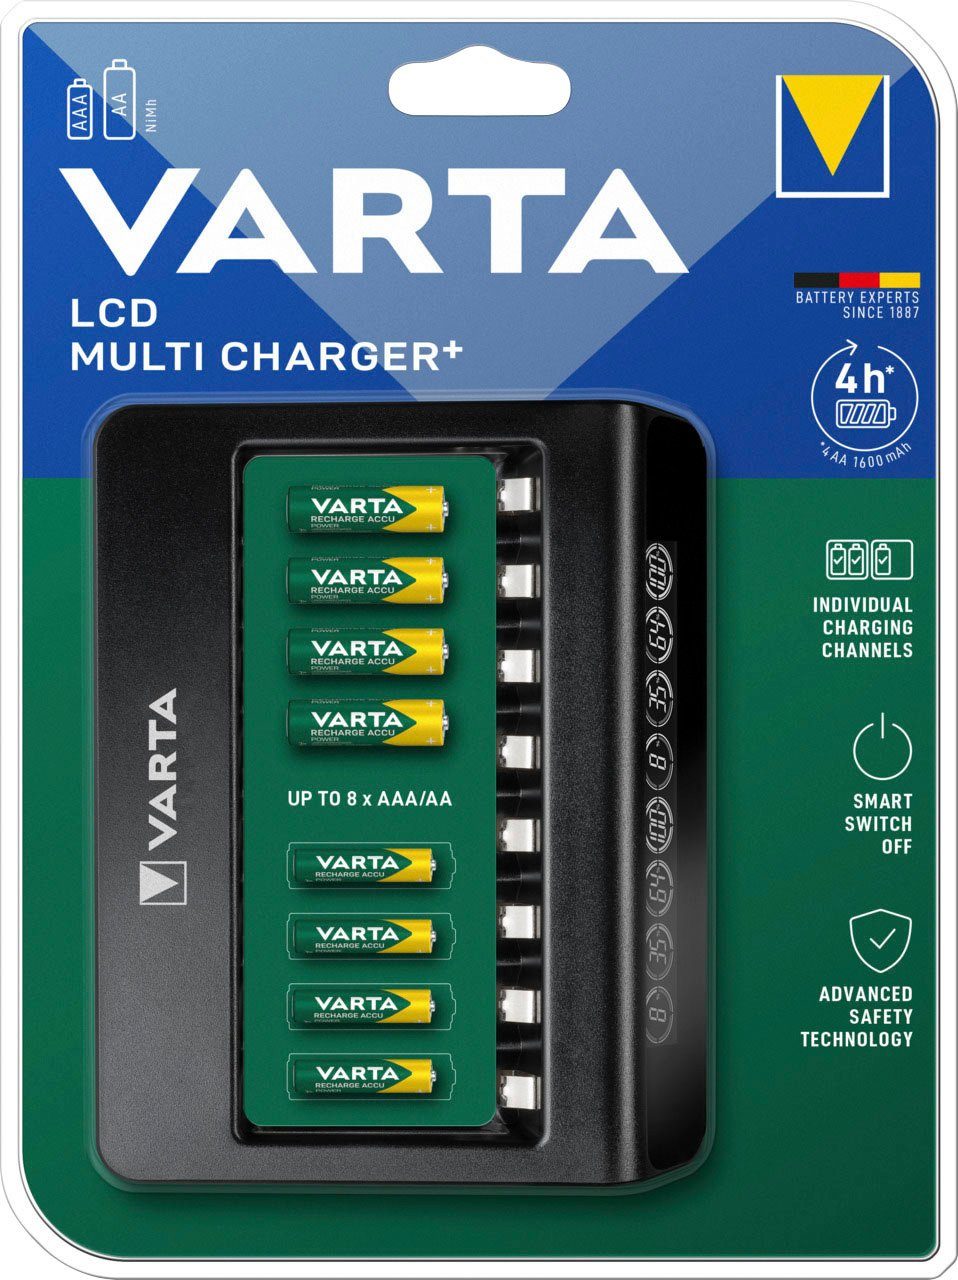 Einzelschachtladun Netzteil Multi Charger+ Akku-Ladestation, LCD Akkus mit für VARTA VARTA 8 LCD Lieferumfang: Multi Charger+ VARTA AA/AAA mit